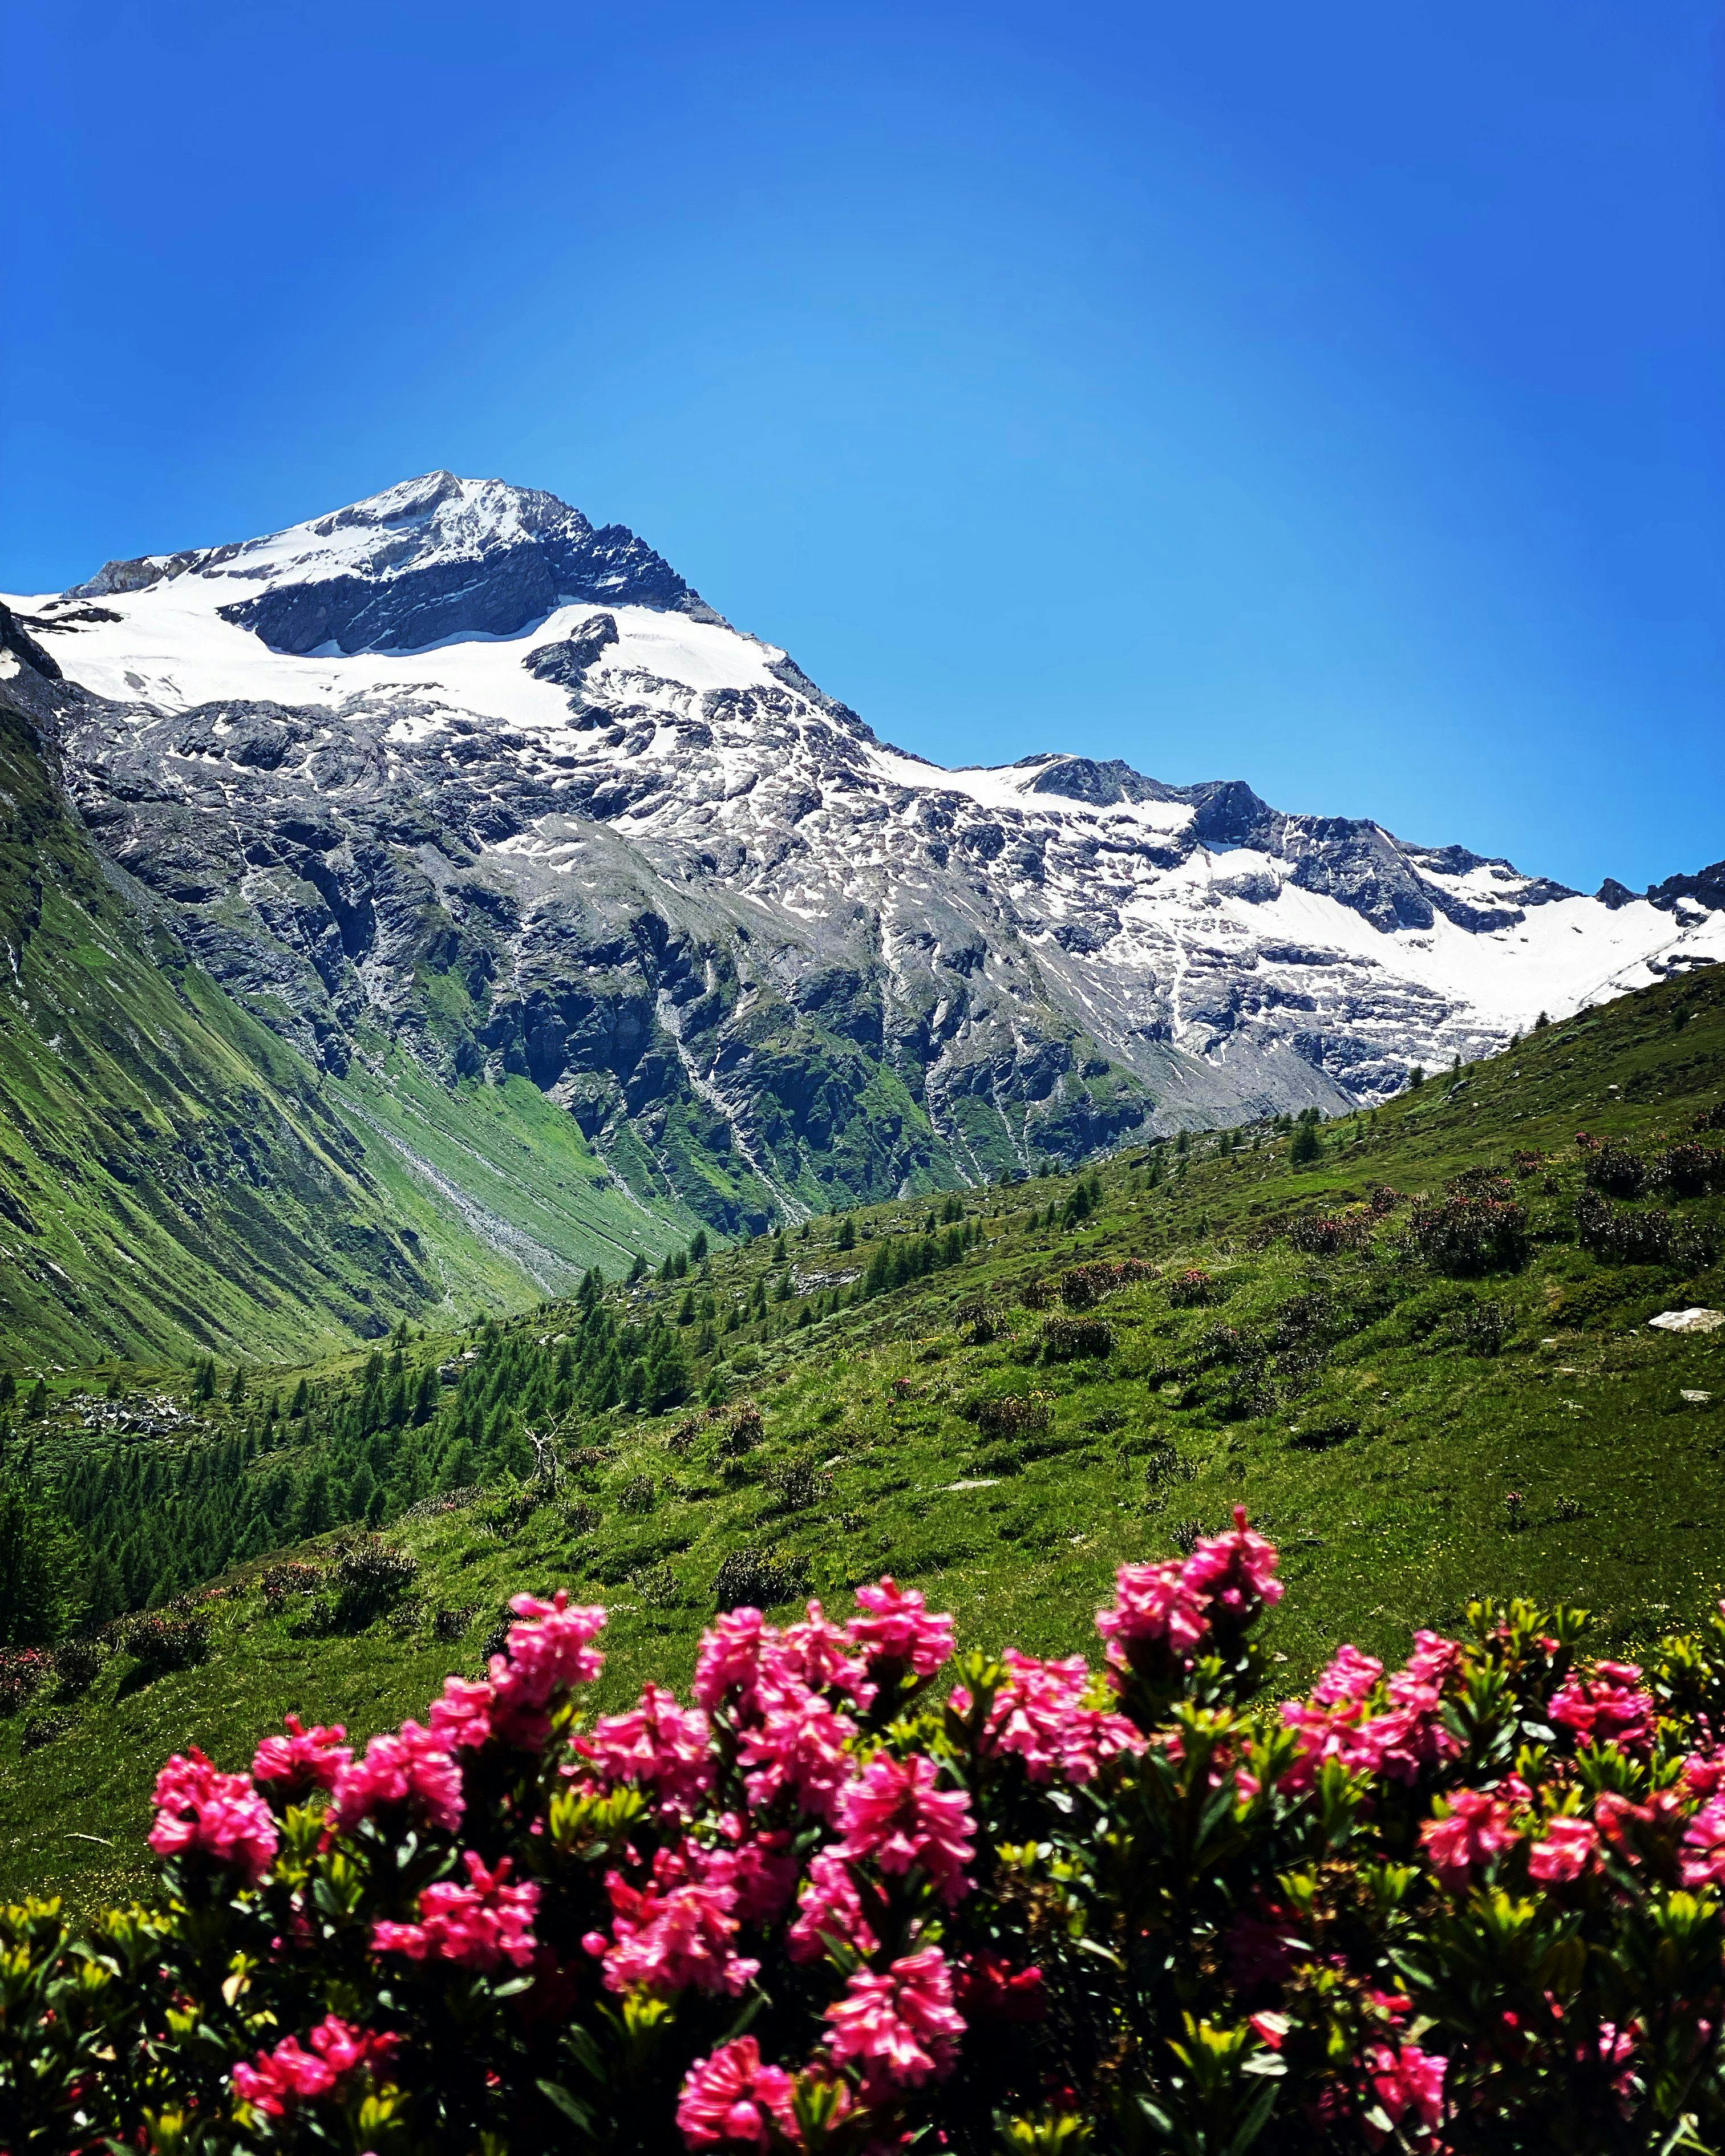 snow capped mountaintops with wild azaleas